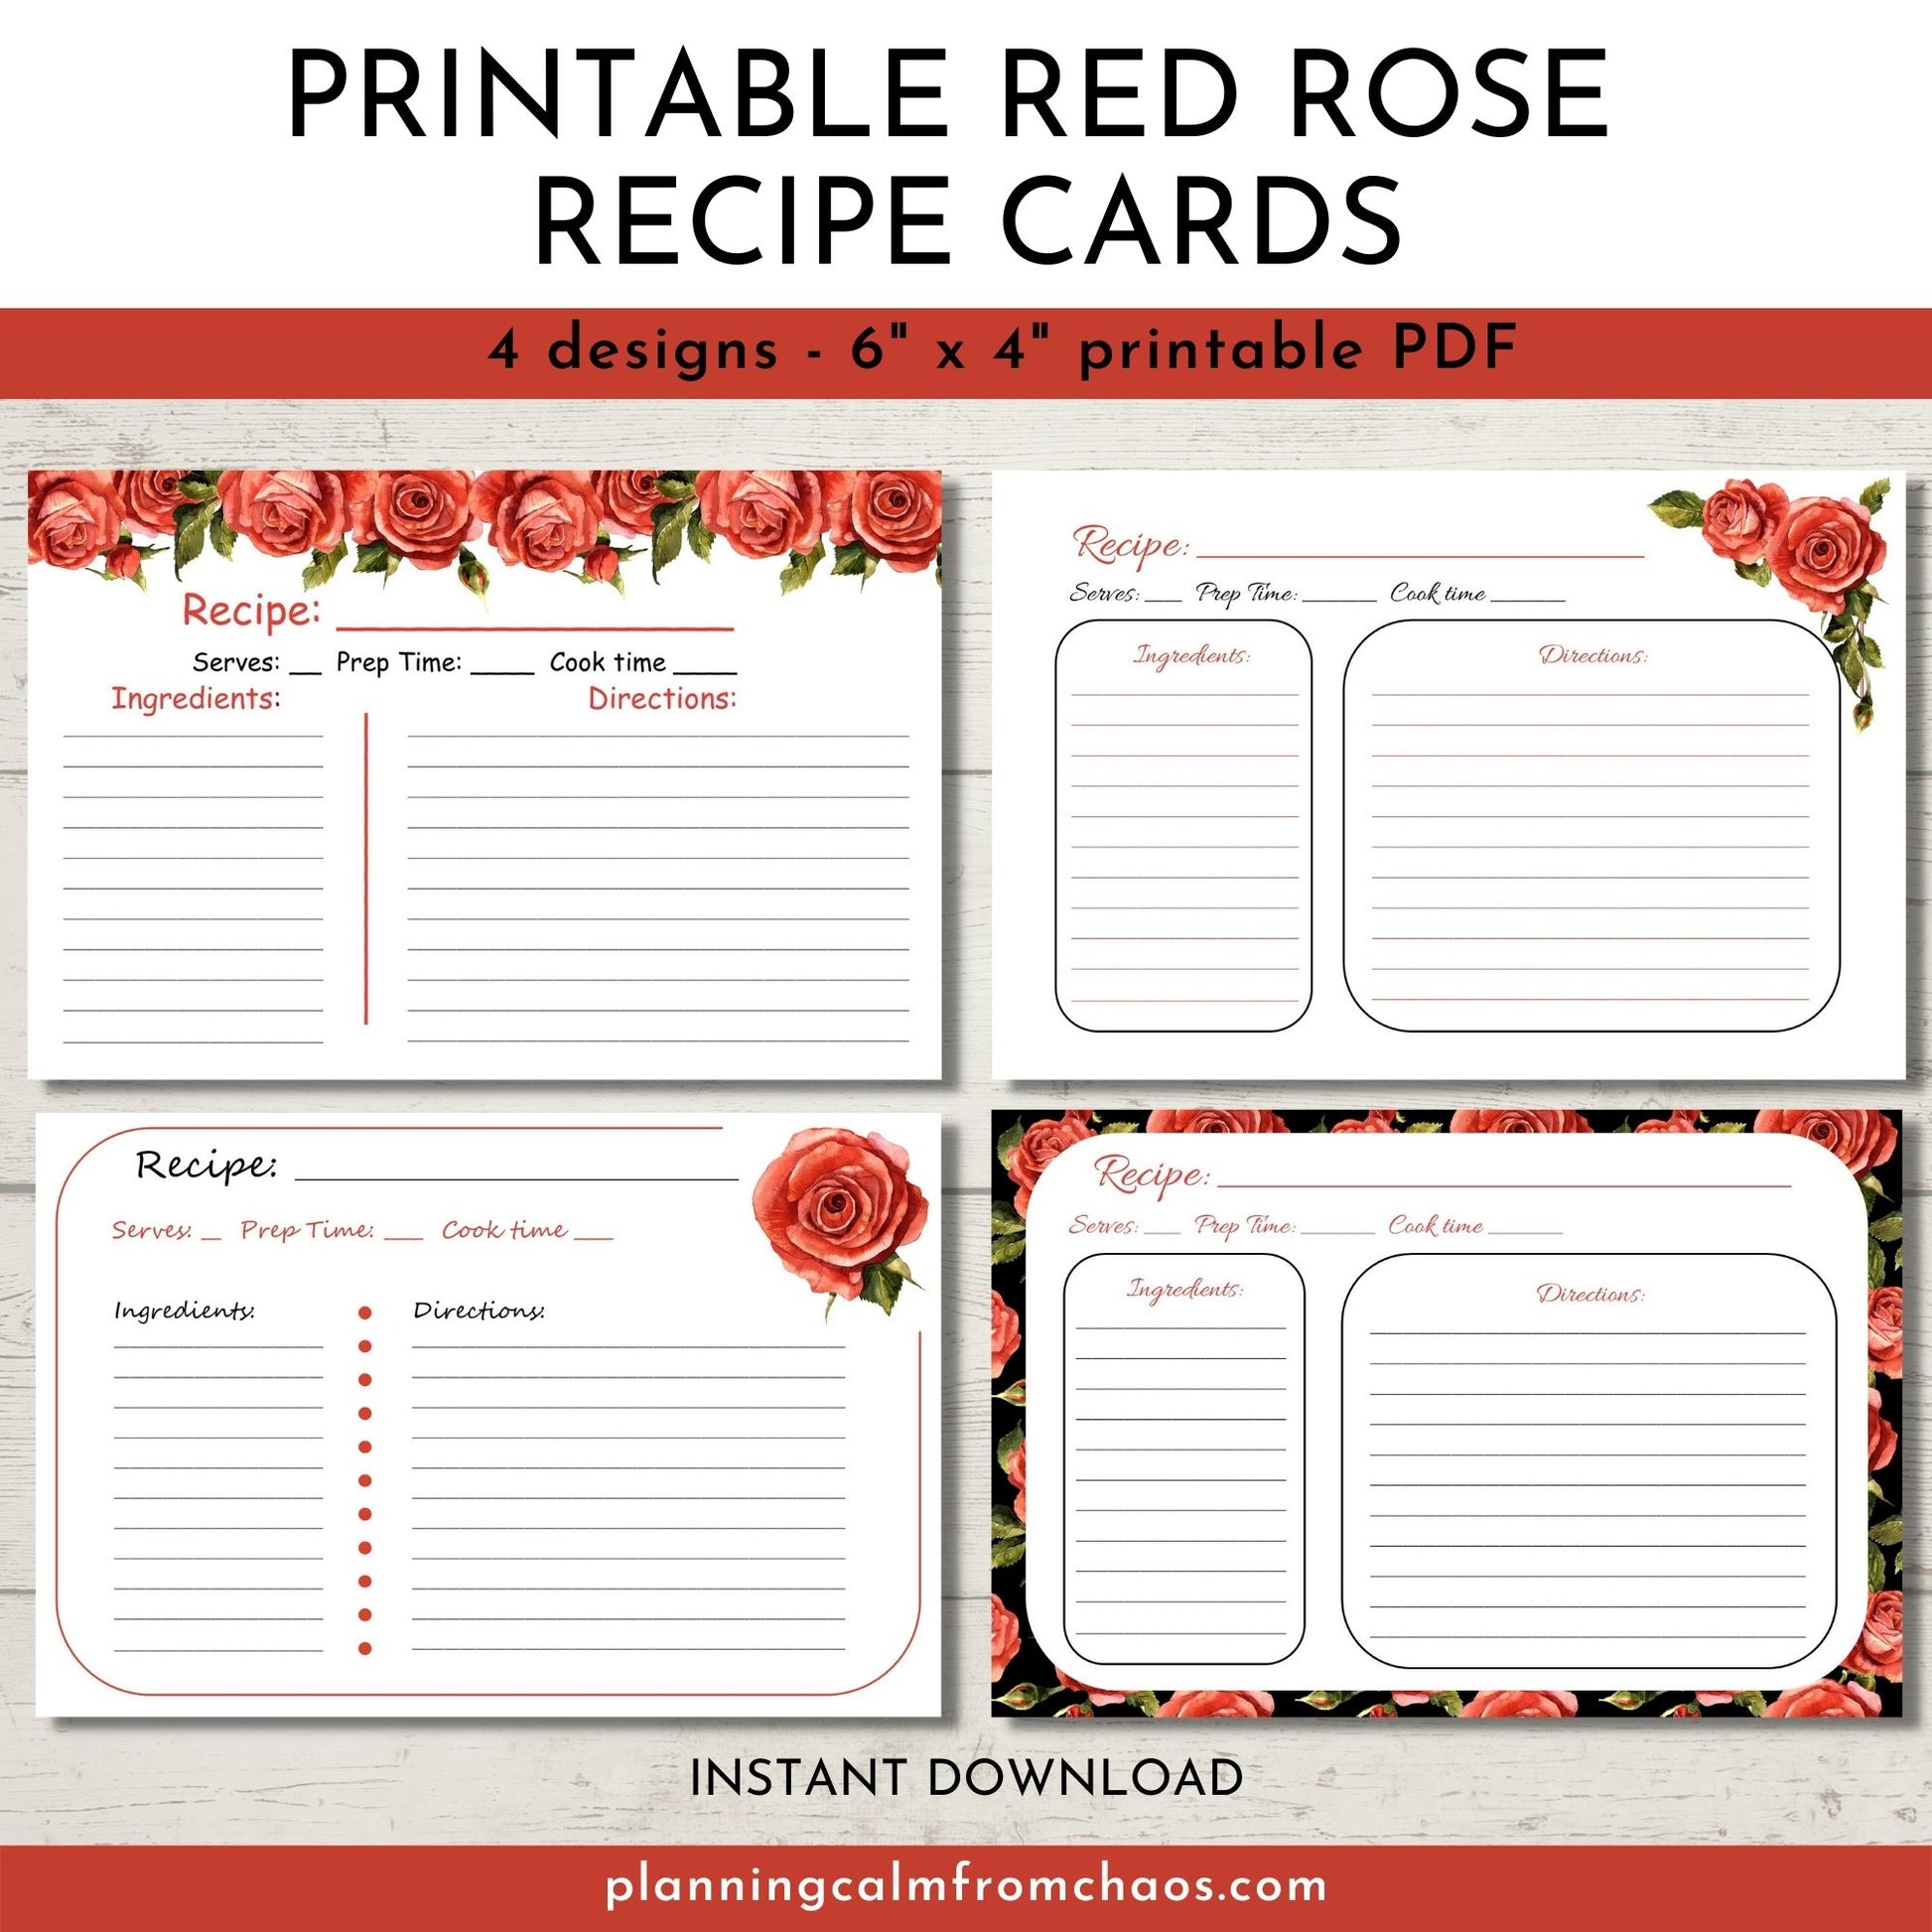 PRINTABLE RED ROSE RECIPE CARDS